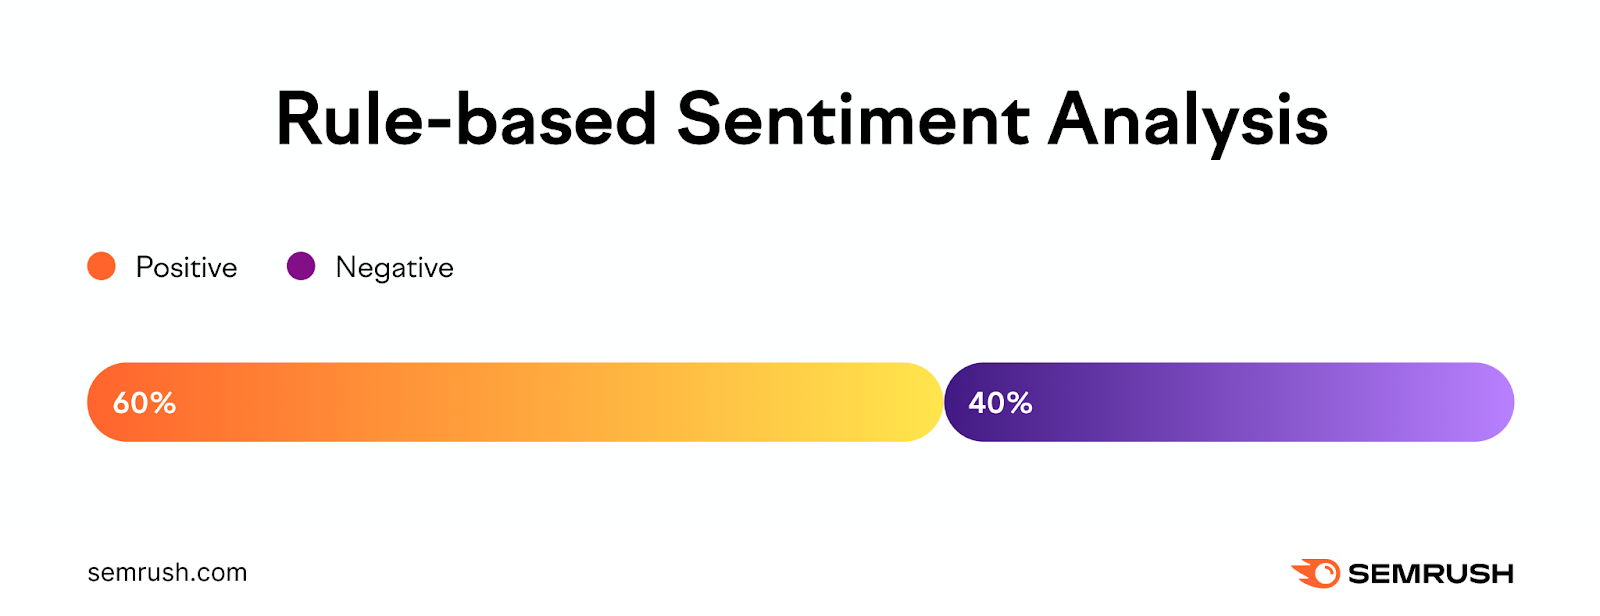 Rule-based sentiment investigation  barroom  graph with 60% affirmative  sentiment and 40% antagonistic  sentiment.